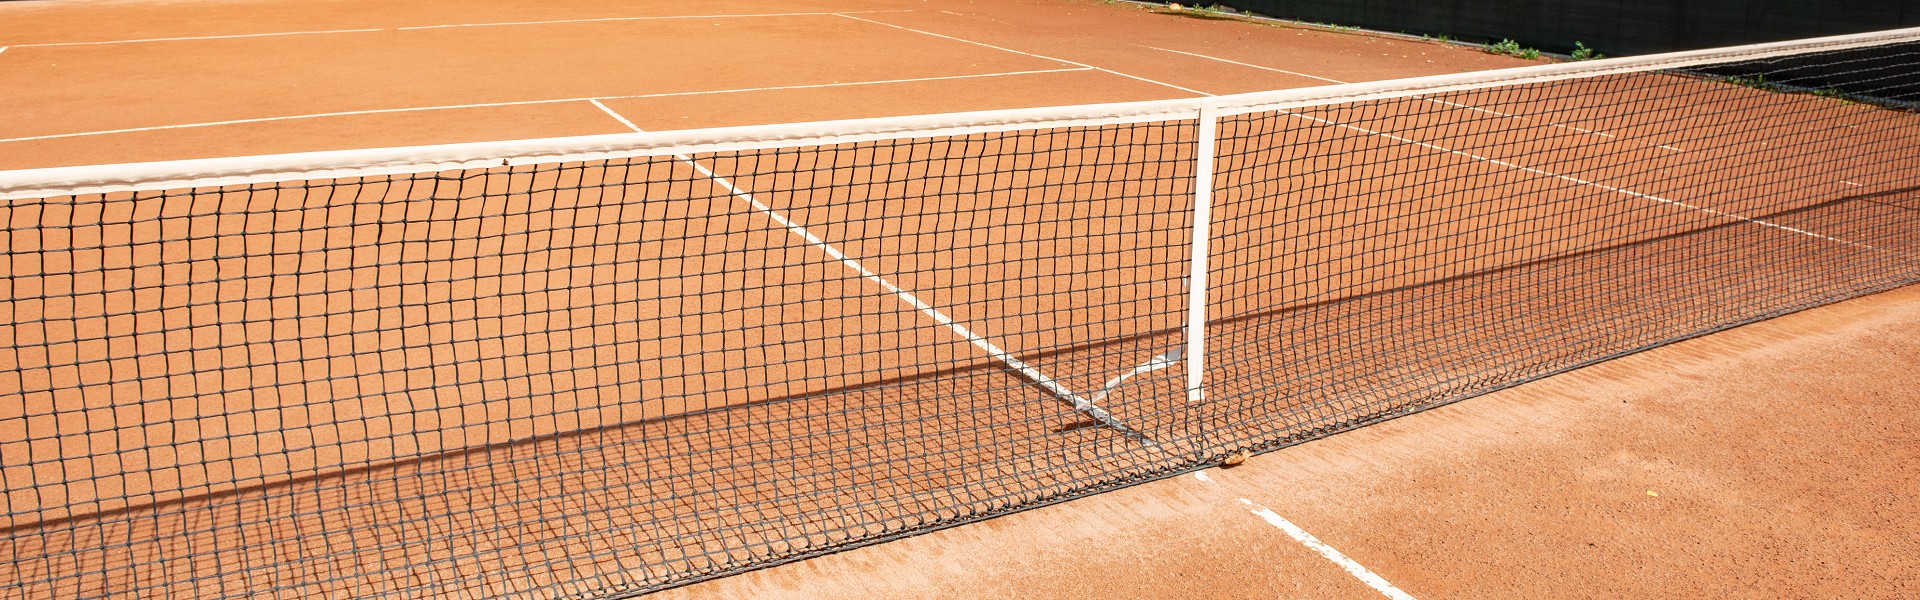 Circolo Tennis Genova | Corsi Tennis Adulti | Campo Tennis Manesseno | Tennis Coperto Genova